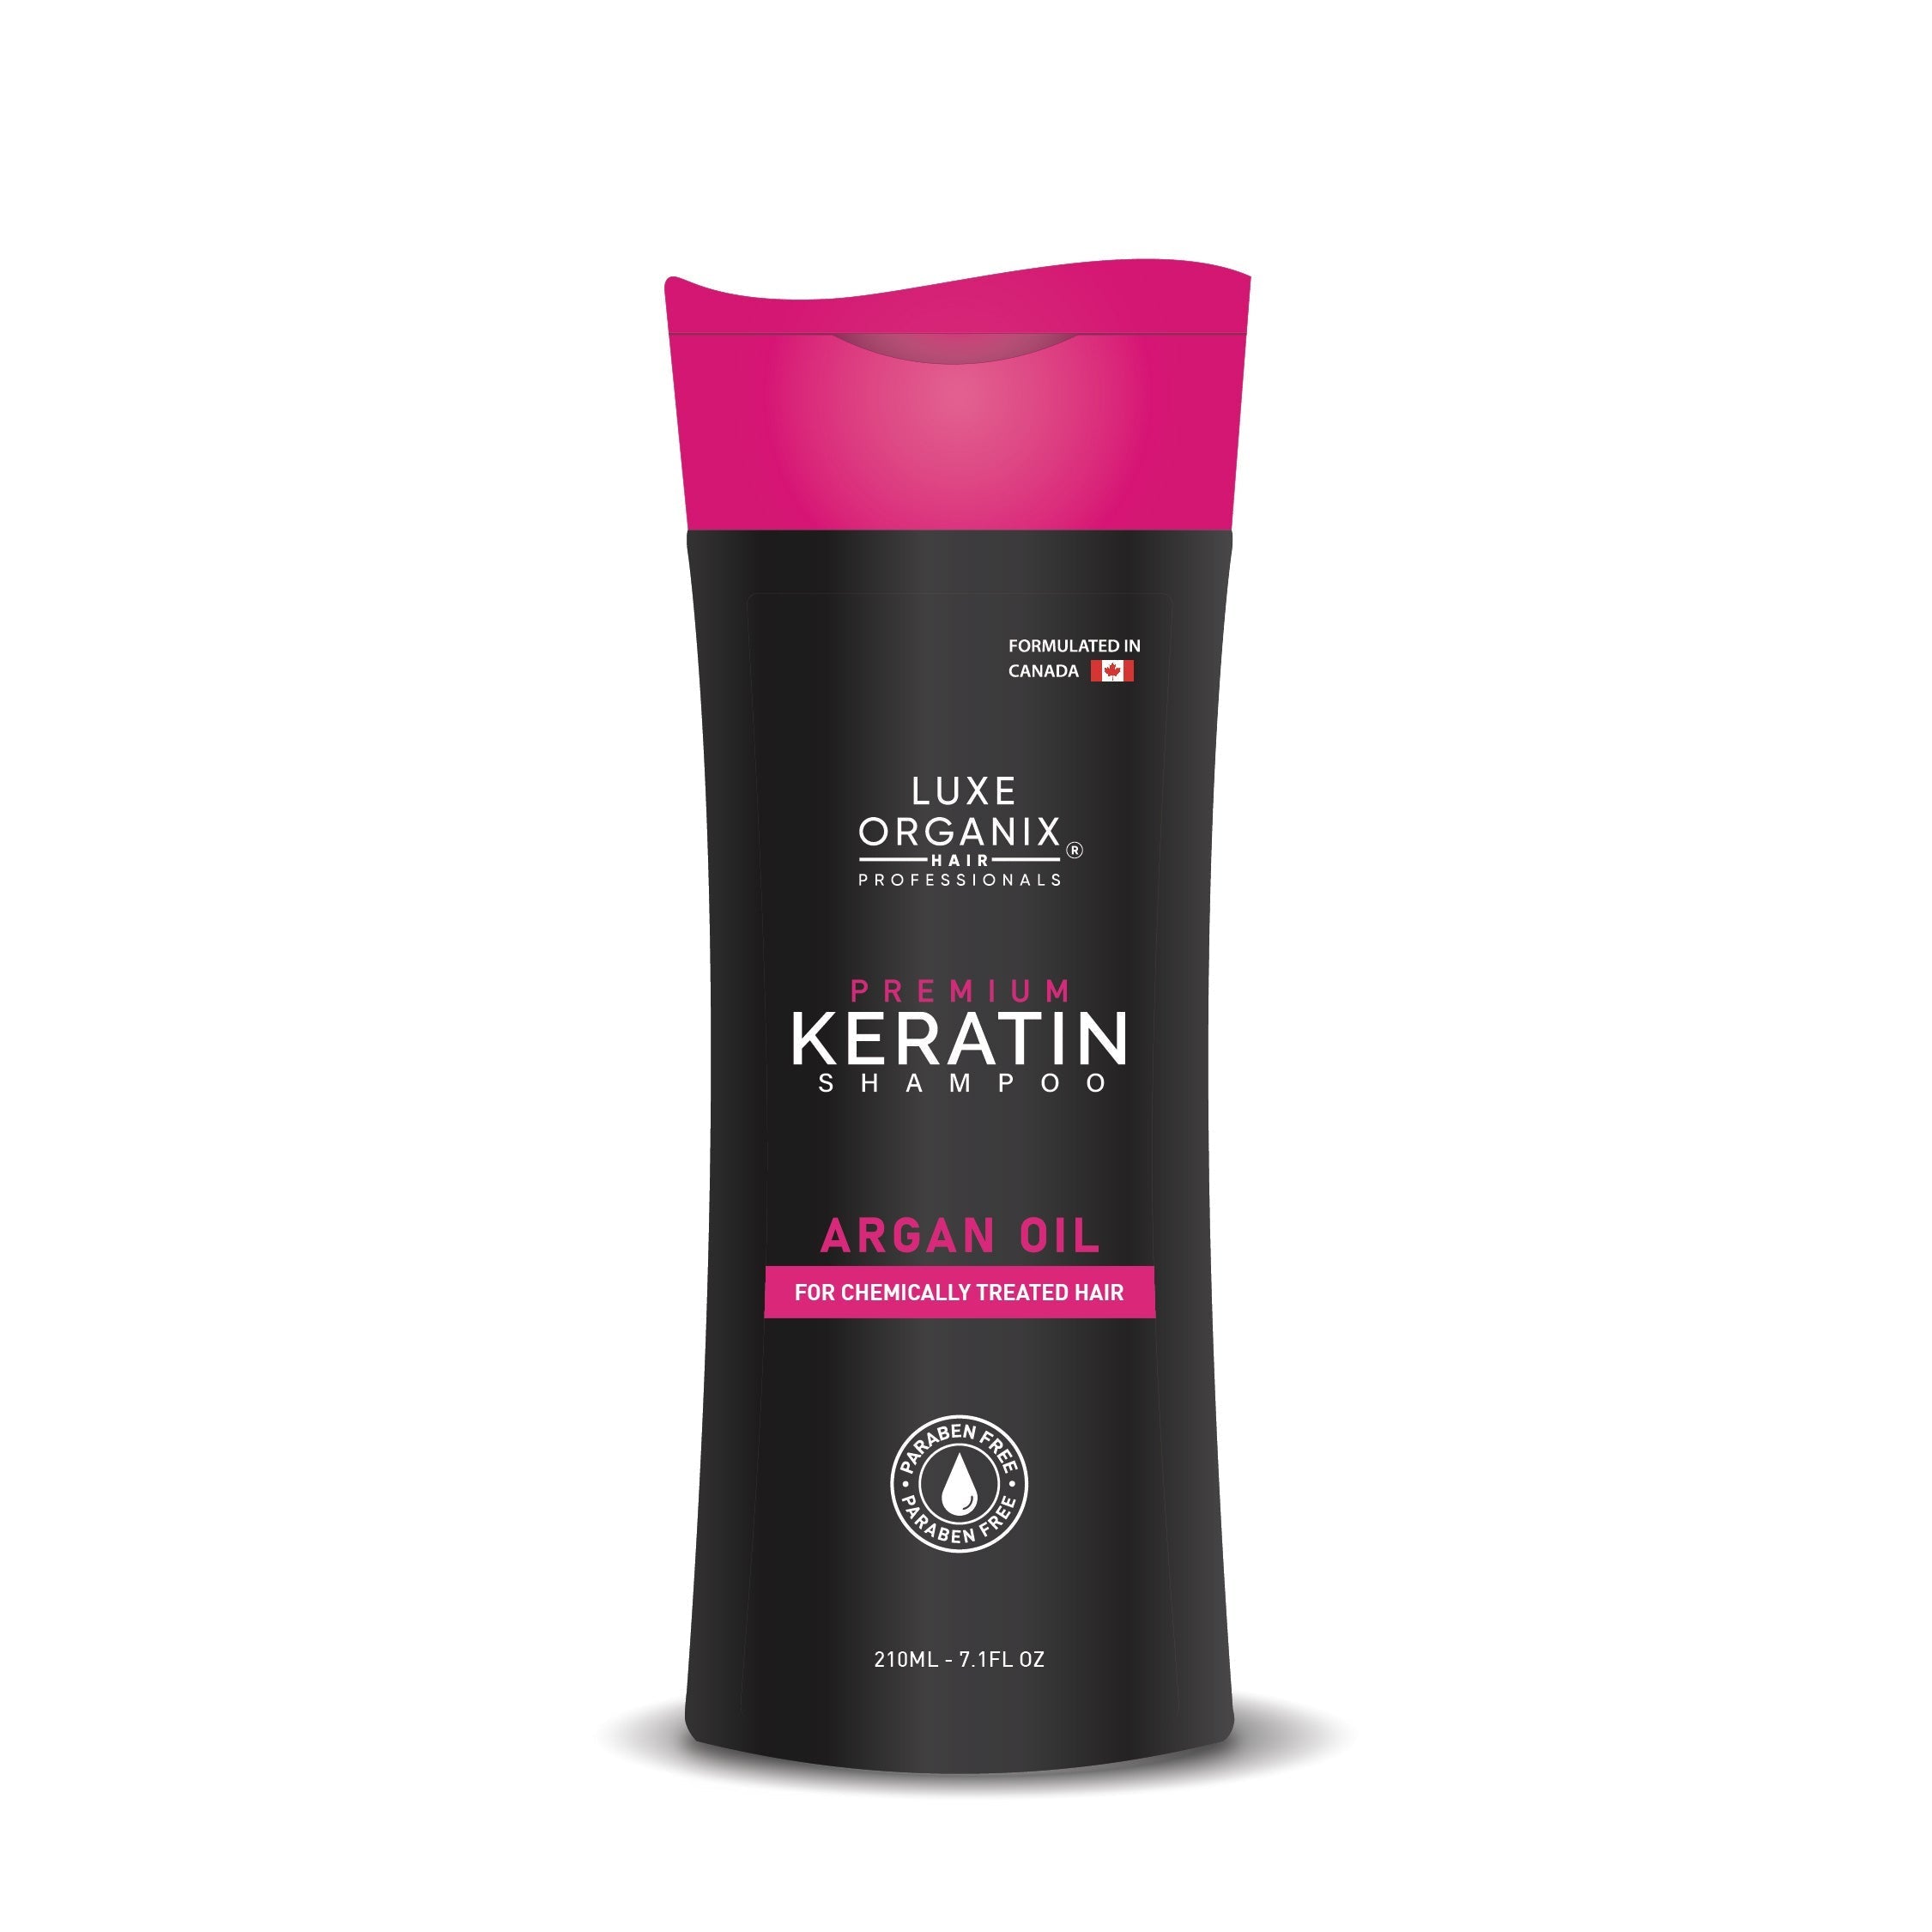 Premium Keratin Shampoo 210ml (Argan Oil)